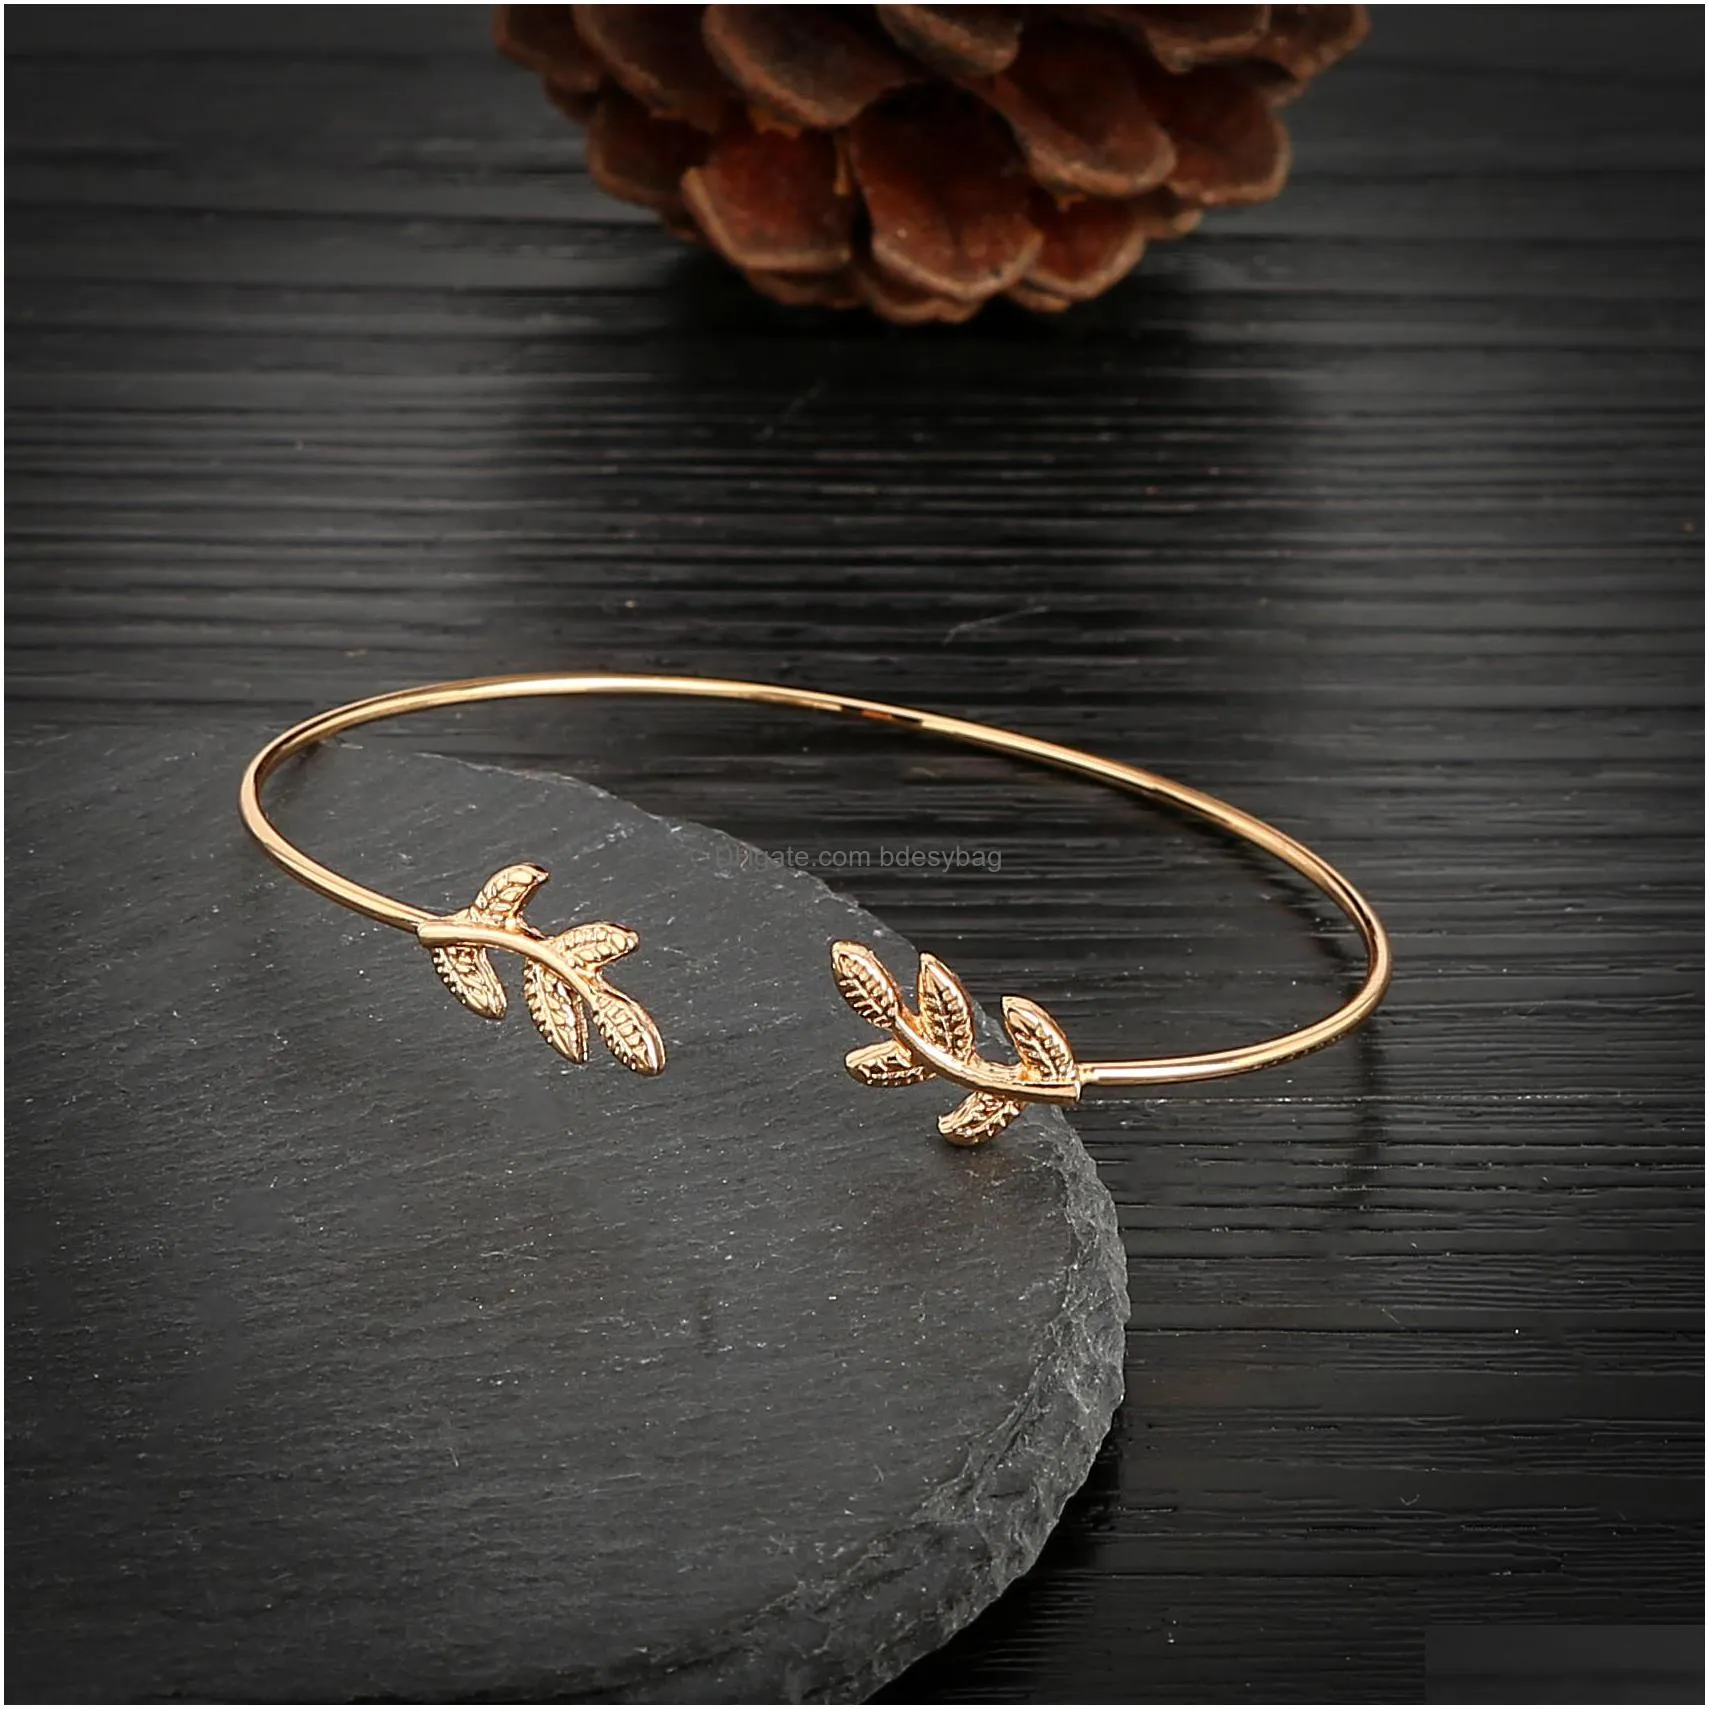 10pc/set leaves bracelet jewelry new women fashion charm leaves shaped open bangle bracelet bohemian leaves knot round chain handmade